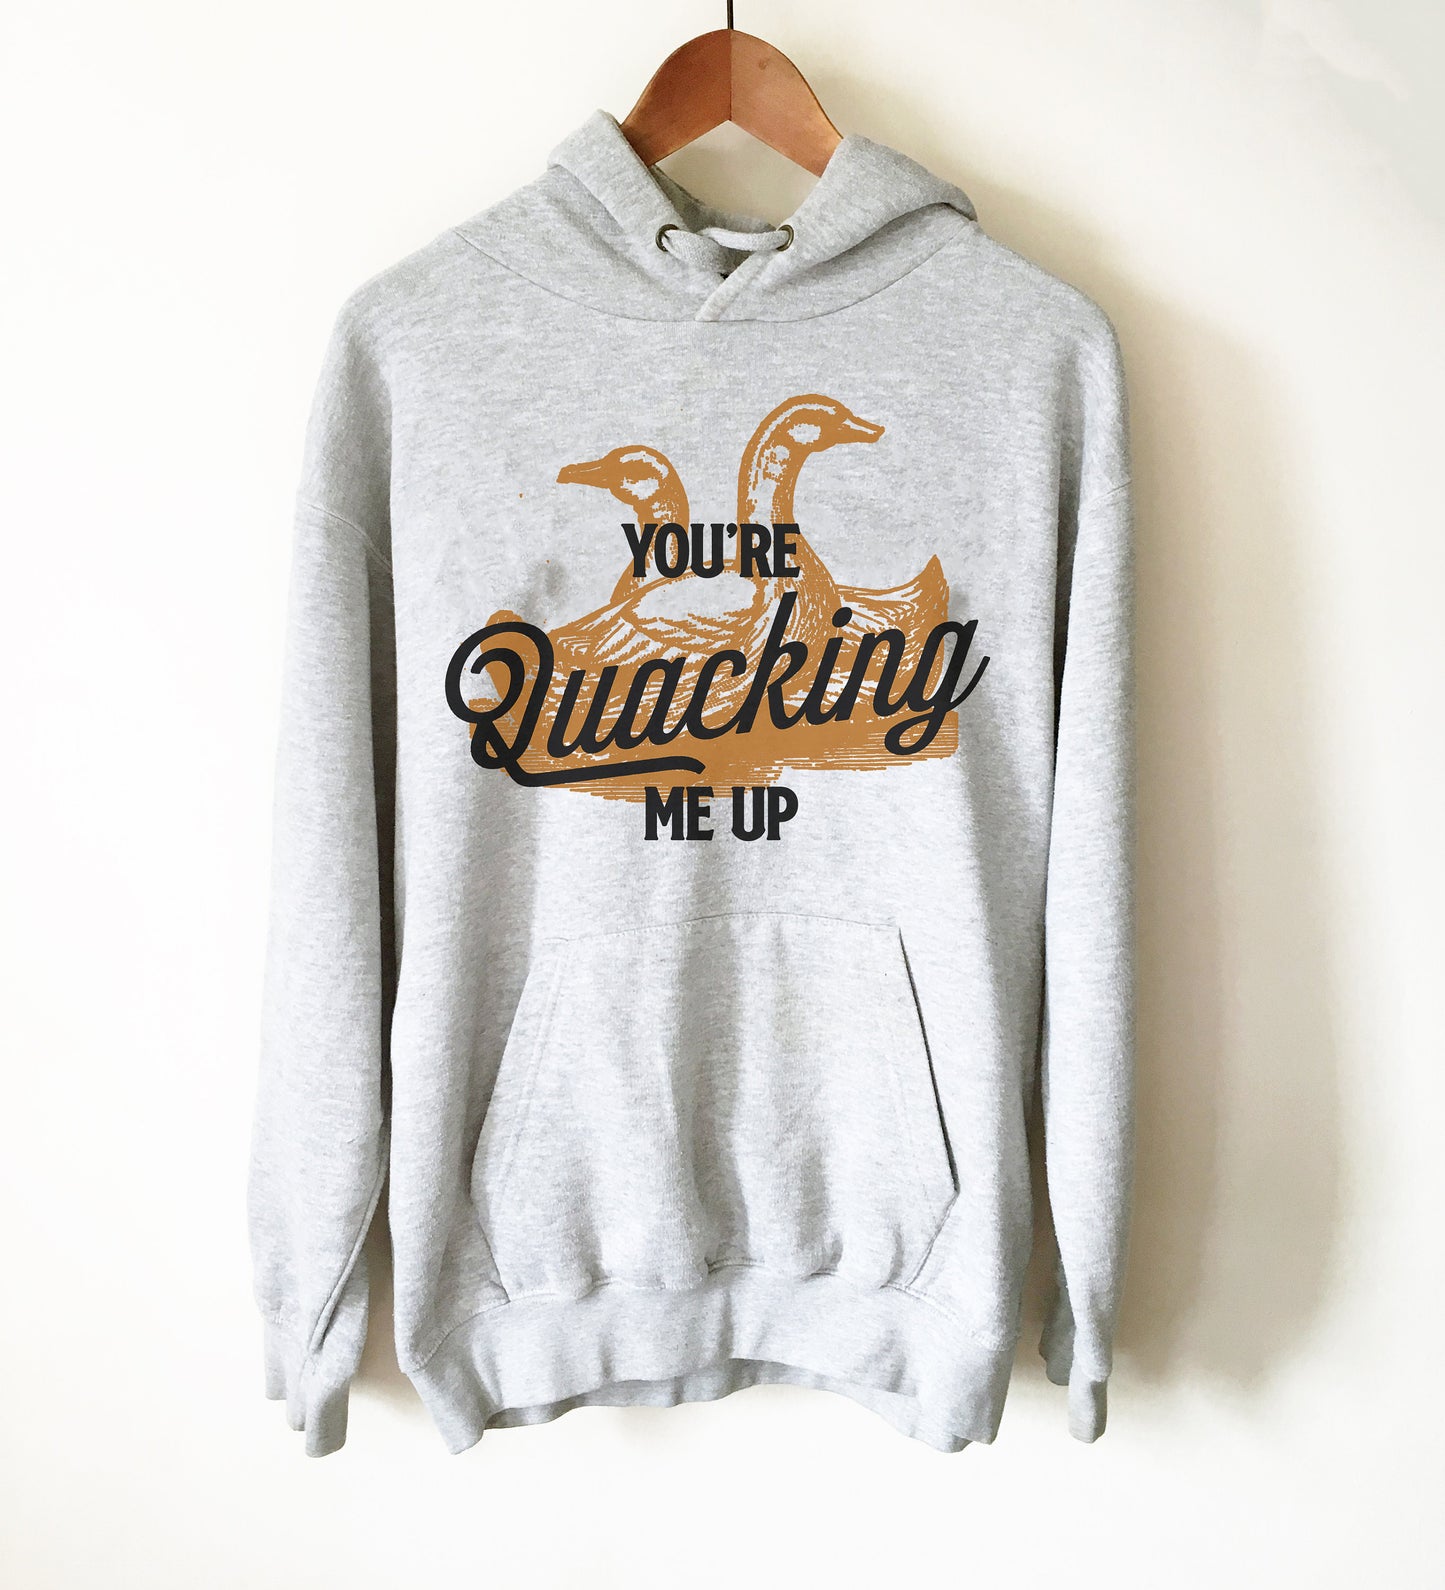 You’re Quacking Me Up Hoodie - Duck Shirt, Duck Gift, Farmer Shirt, Farmer Gift, Duck Hunting, Rubber Duck, Duck Lover Gift